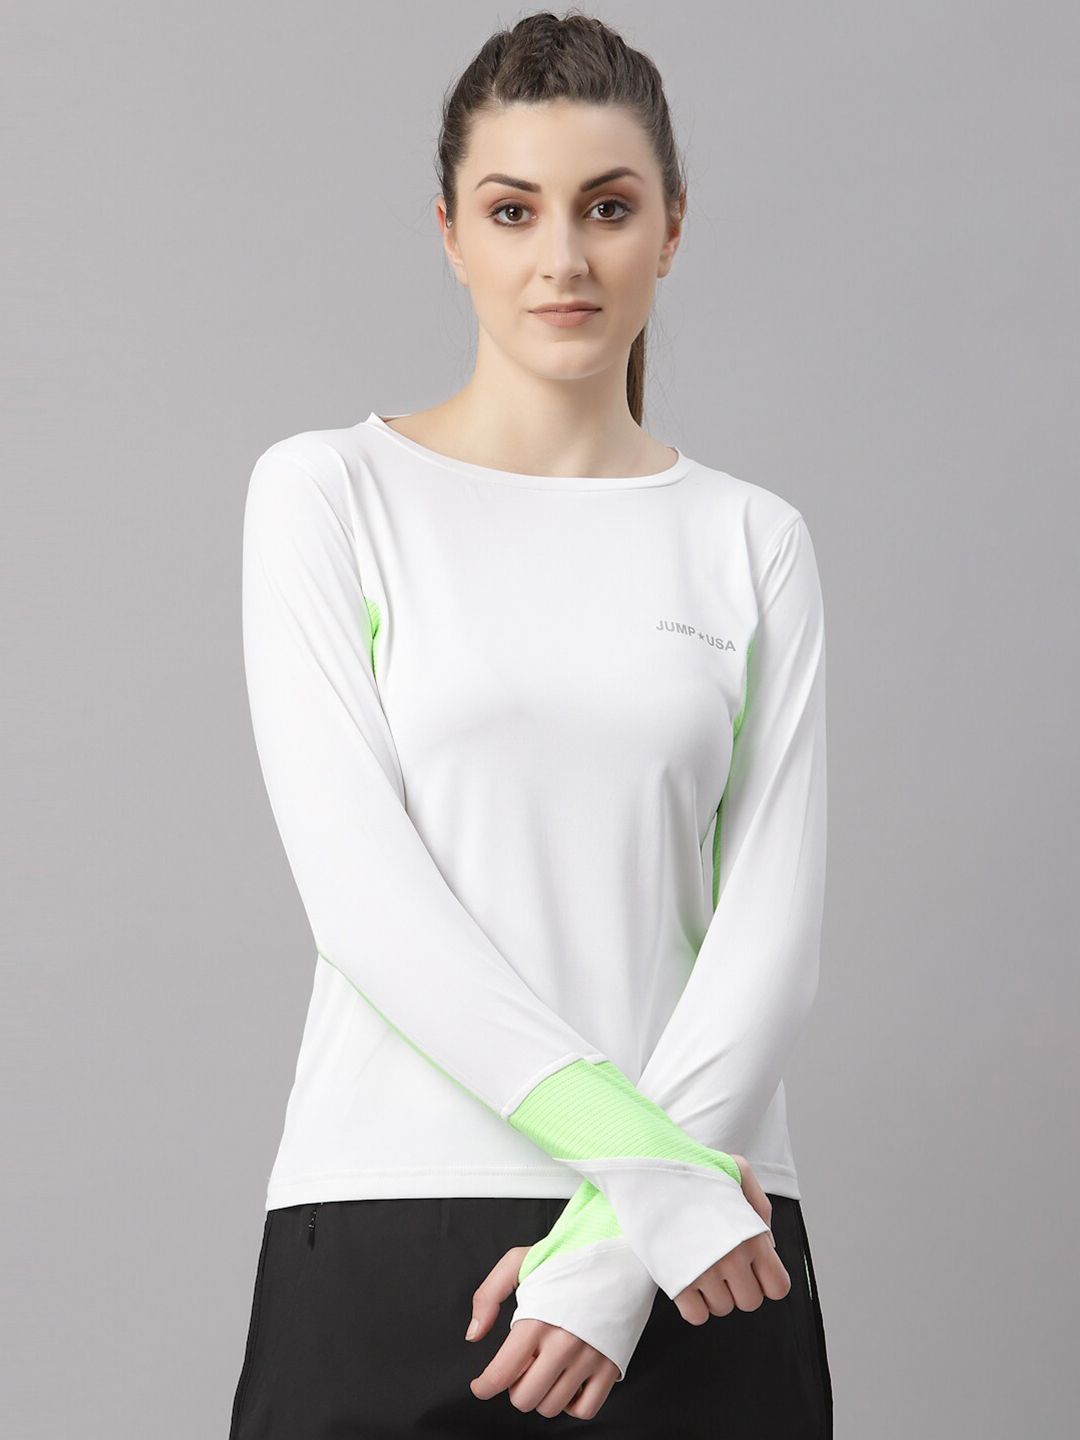 JUMP USA Women White & Fluorescent Green Colourblocked T-shirt Price in India